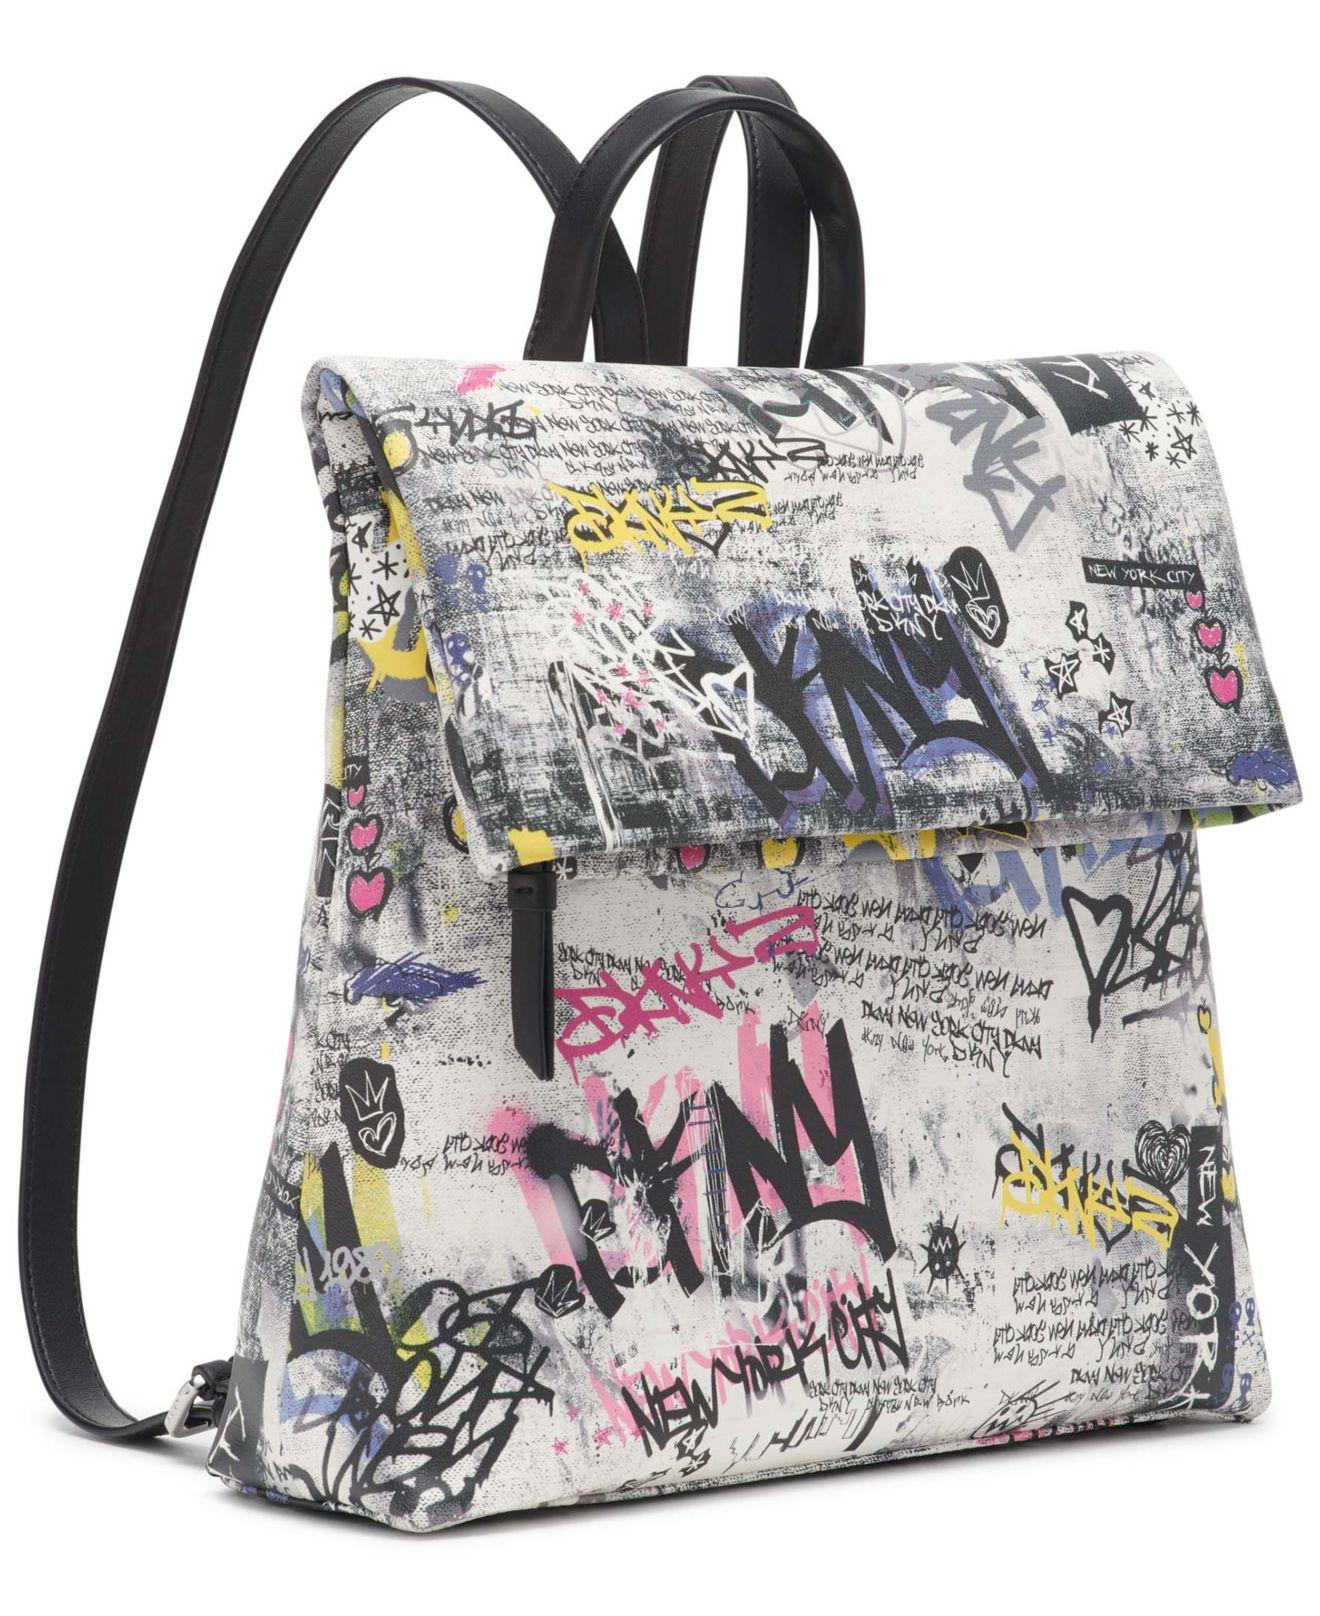 DKNY Tilly Graffiti Foldover Backpack - Lyst